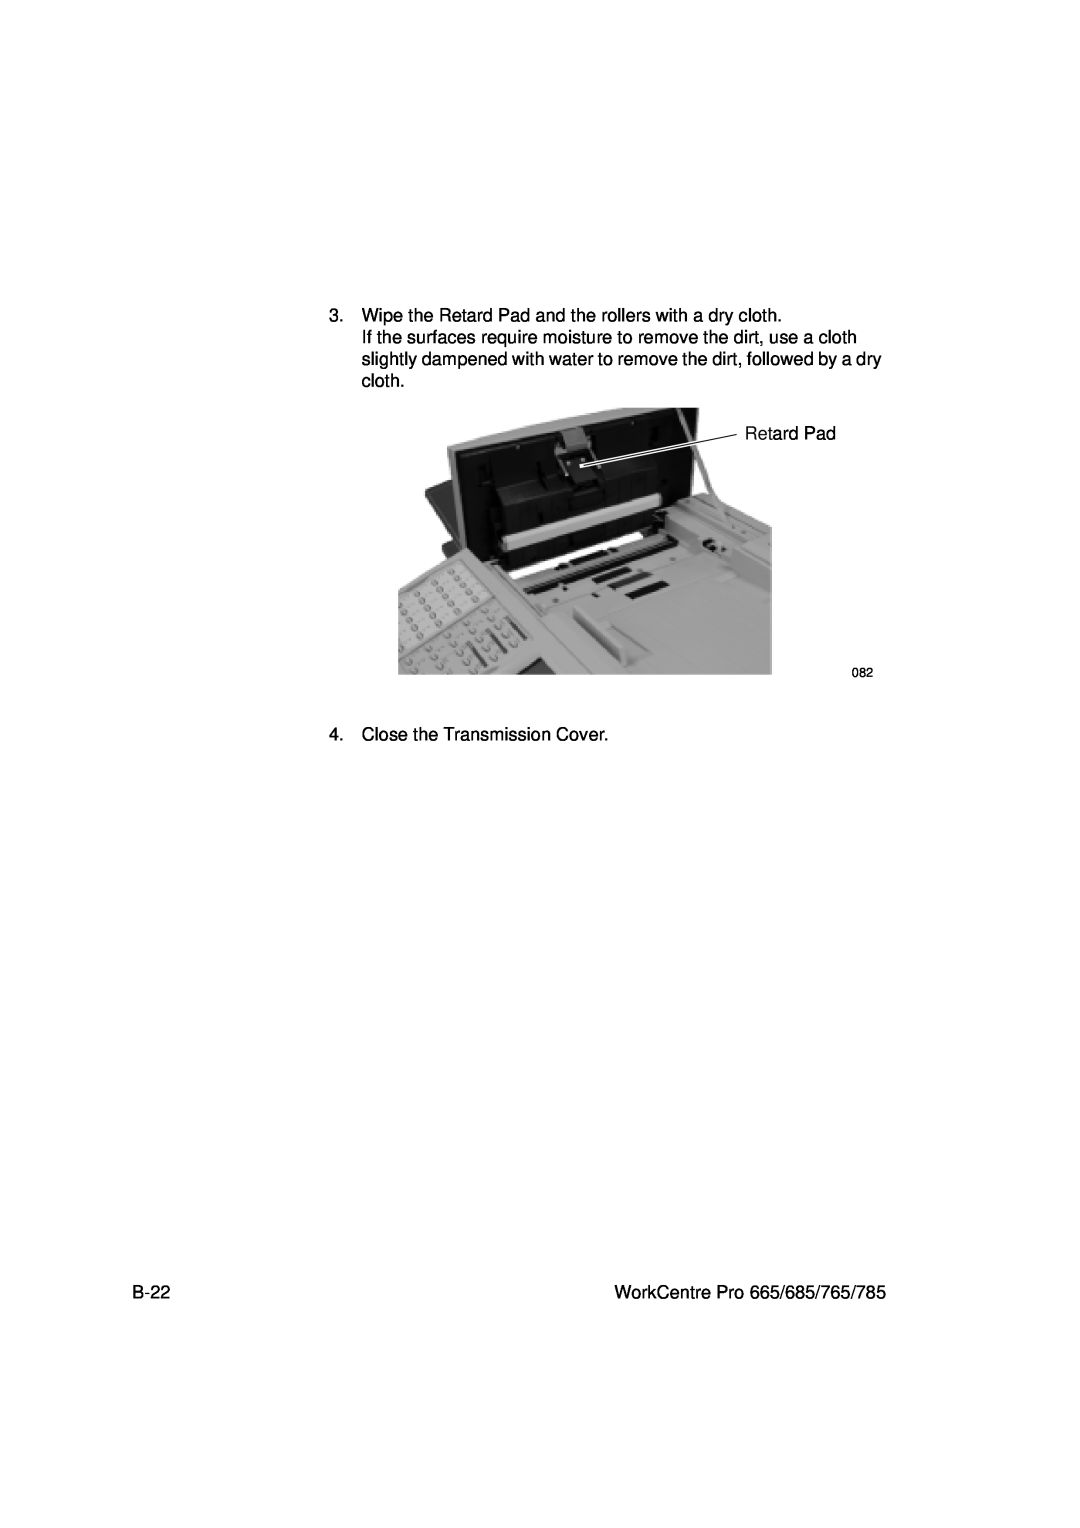 Xerox manual Retard Pad, Close the Transmission Cover, B-22, WorkCentre Pro 665/685/765/785 